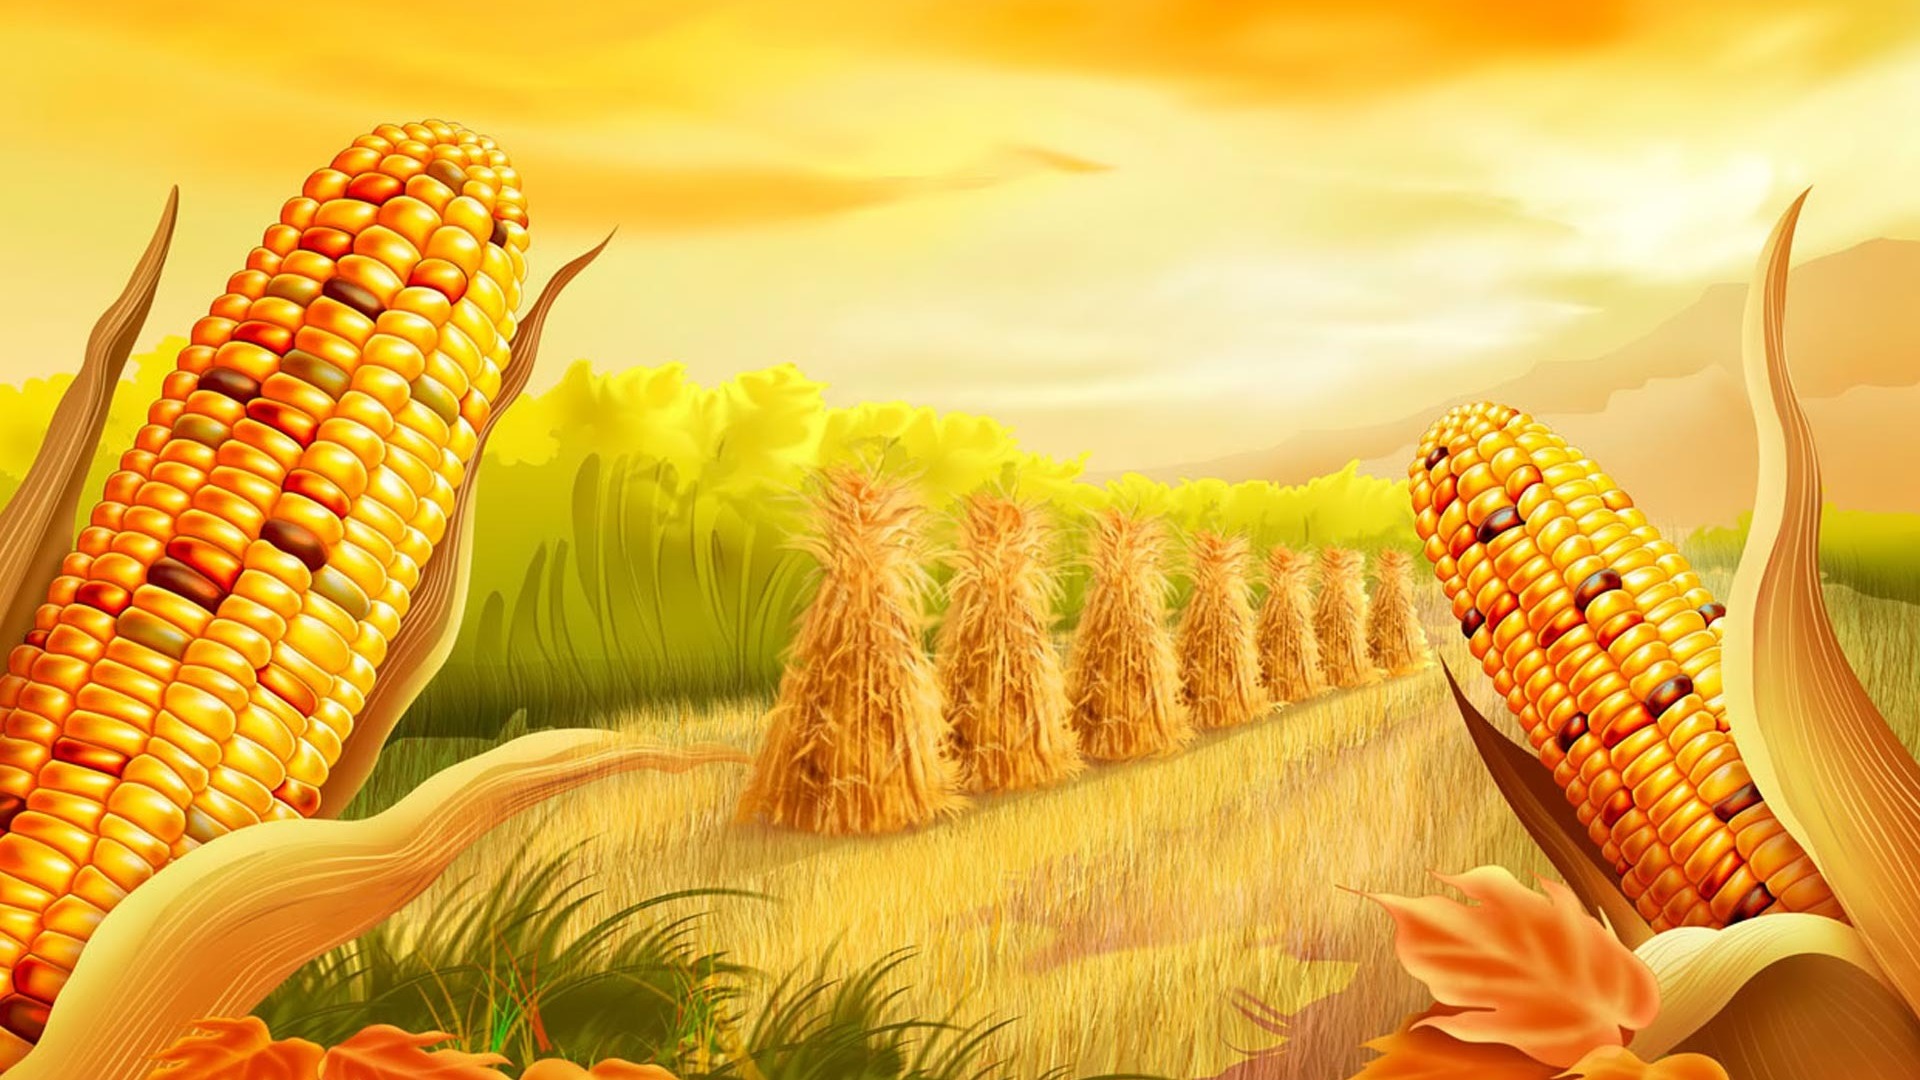 corn wallpaper,corn kernels,corn,sweet corn,corn on the cob,natural foods